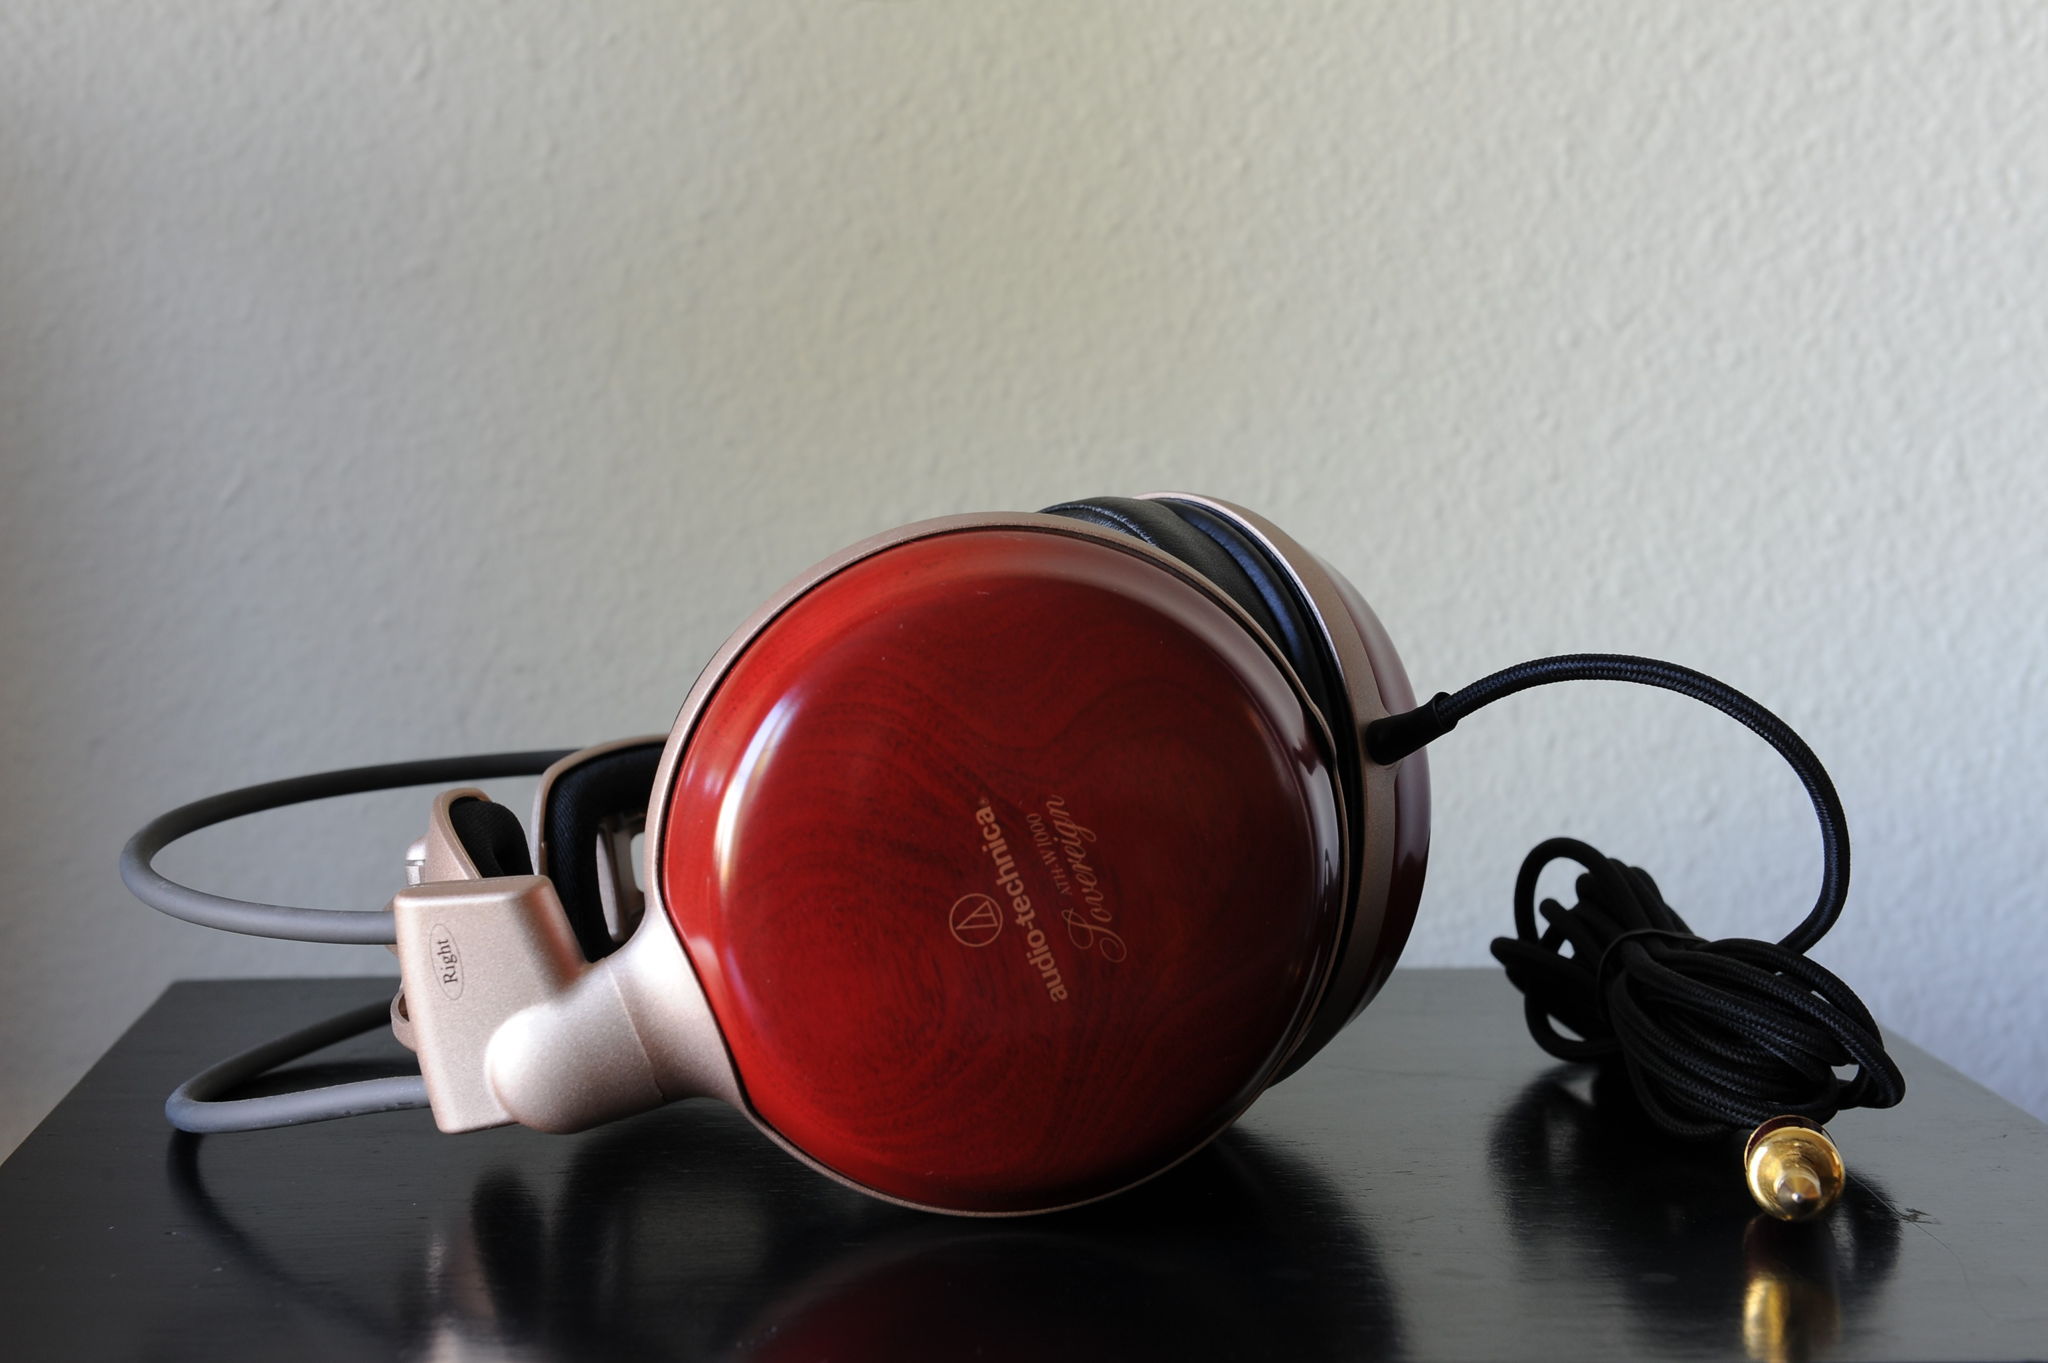 Audio-Technica ATH-W1000 'Sovereign' Headp... For Sale | Audiogon